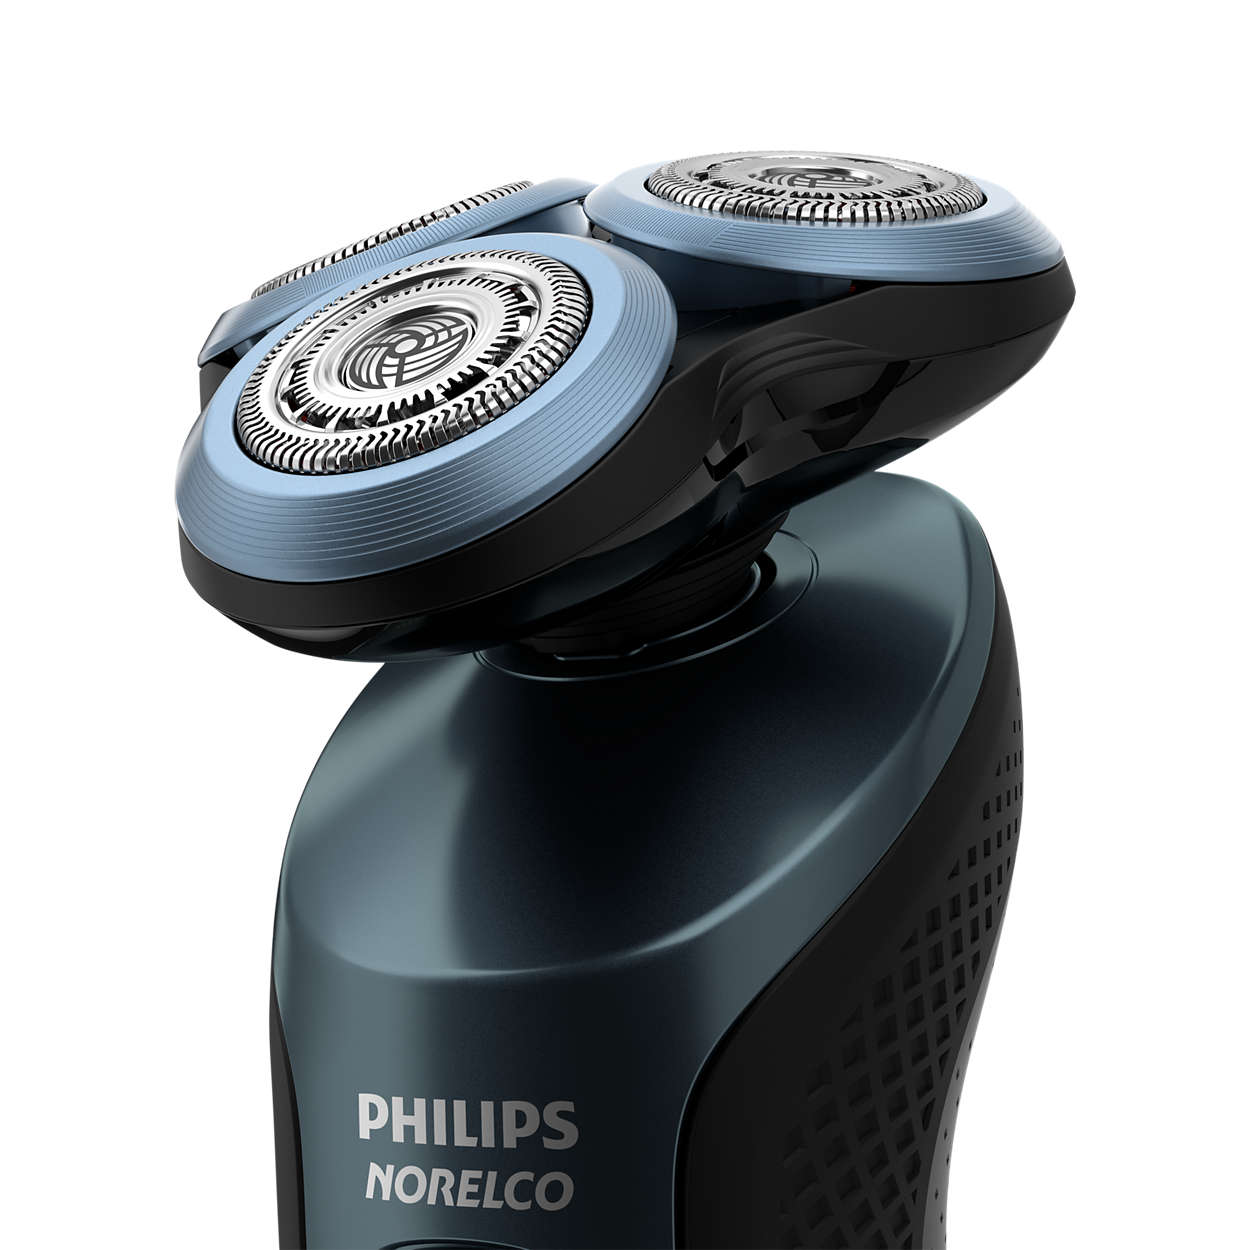 Бритвы филипс в москве. Бритва Филипс шейвер. Philips s6000. Philips 6000 Series. Бритва Филипс 6000 Series.